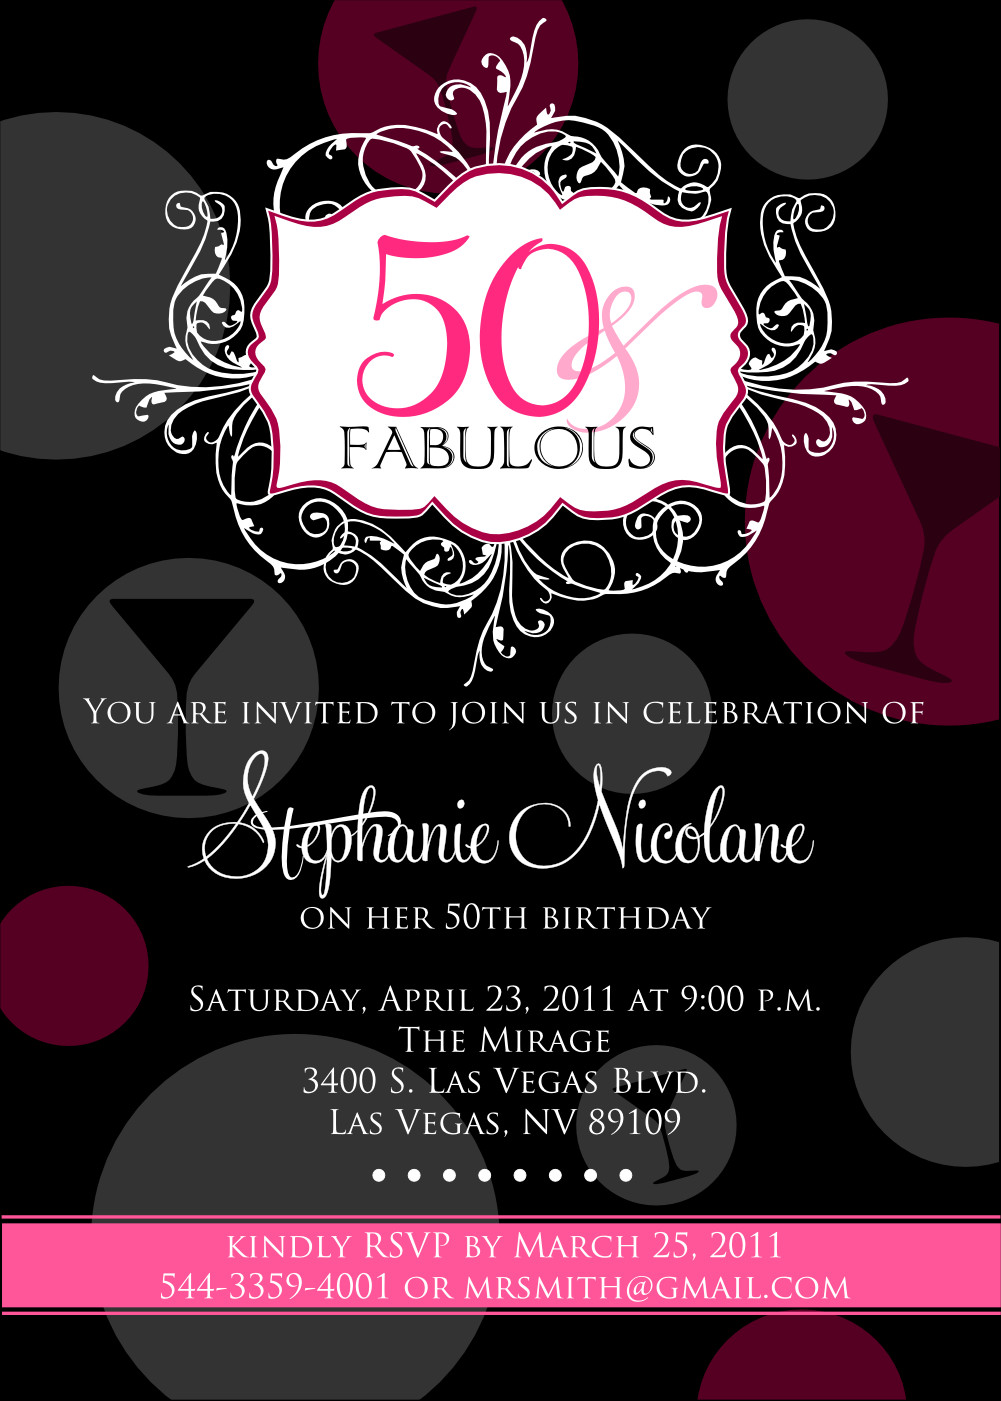 50th Birthday Party Invitation
 FREE Printable 50th Birthday Invitations for Women